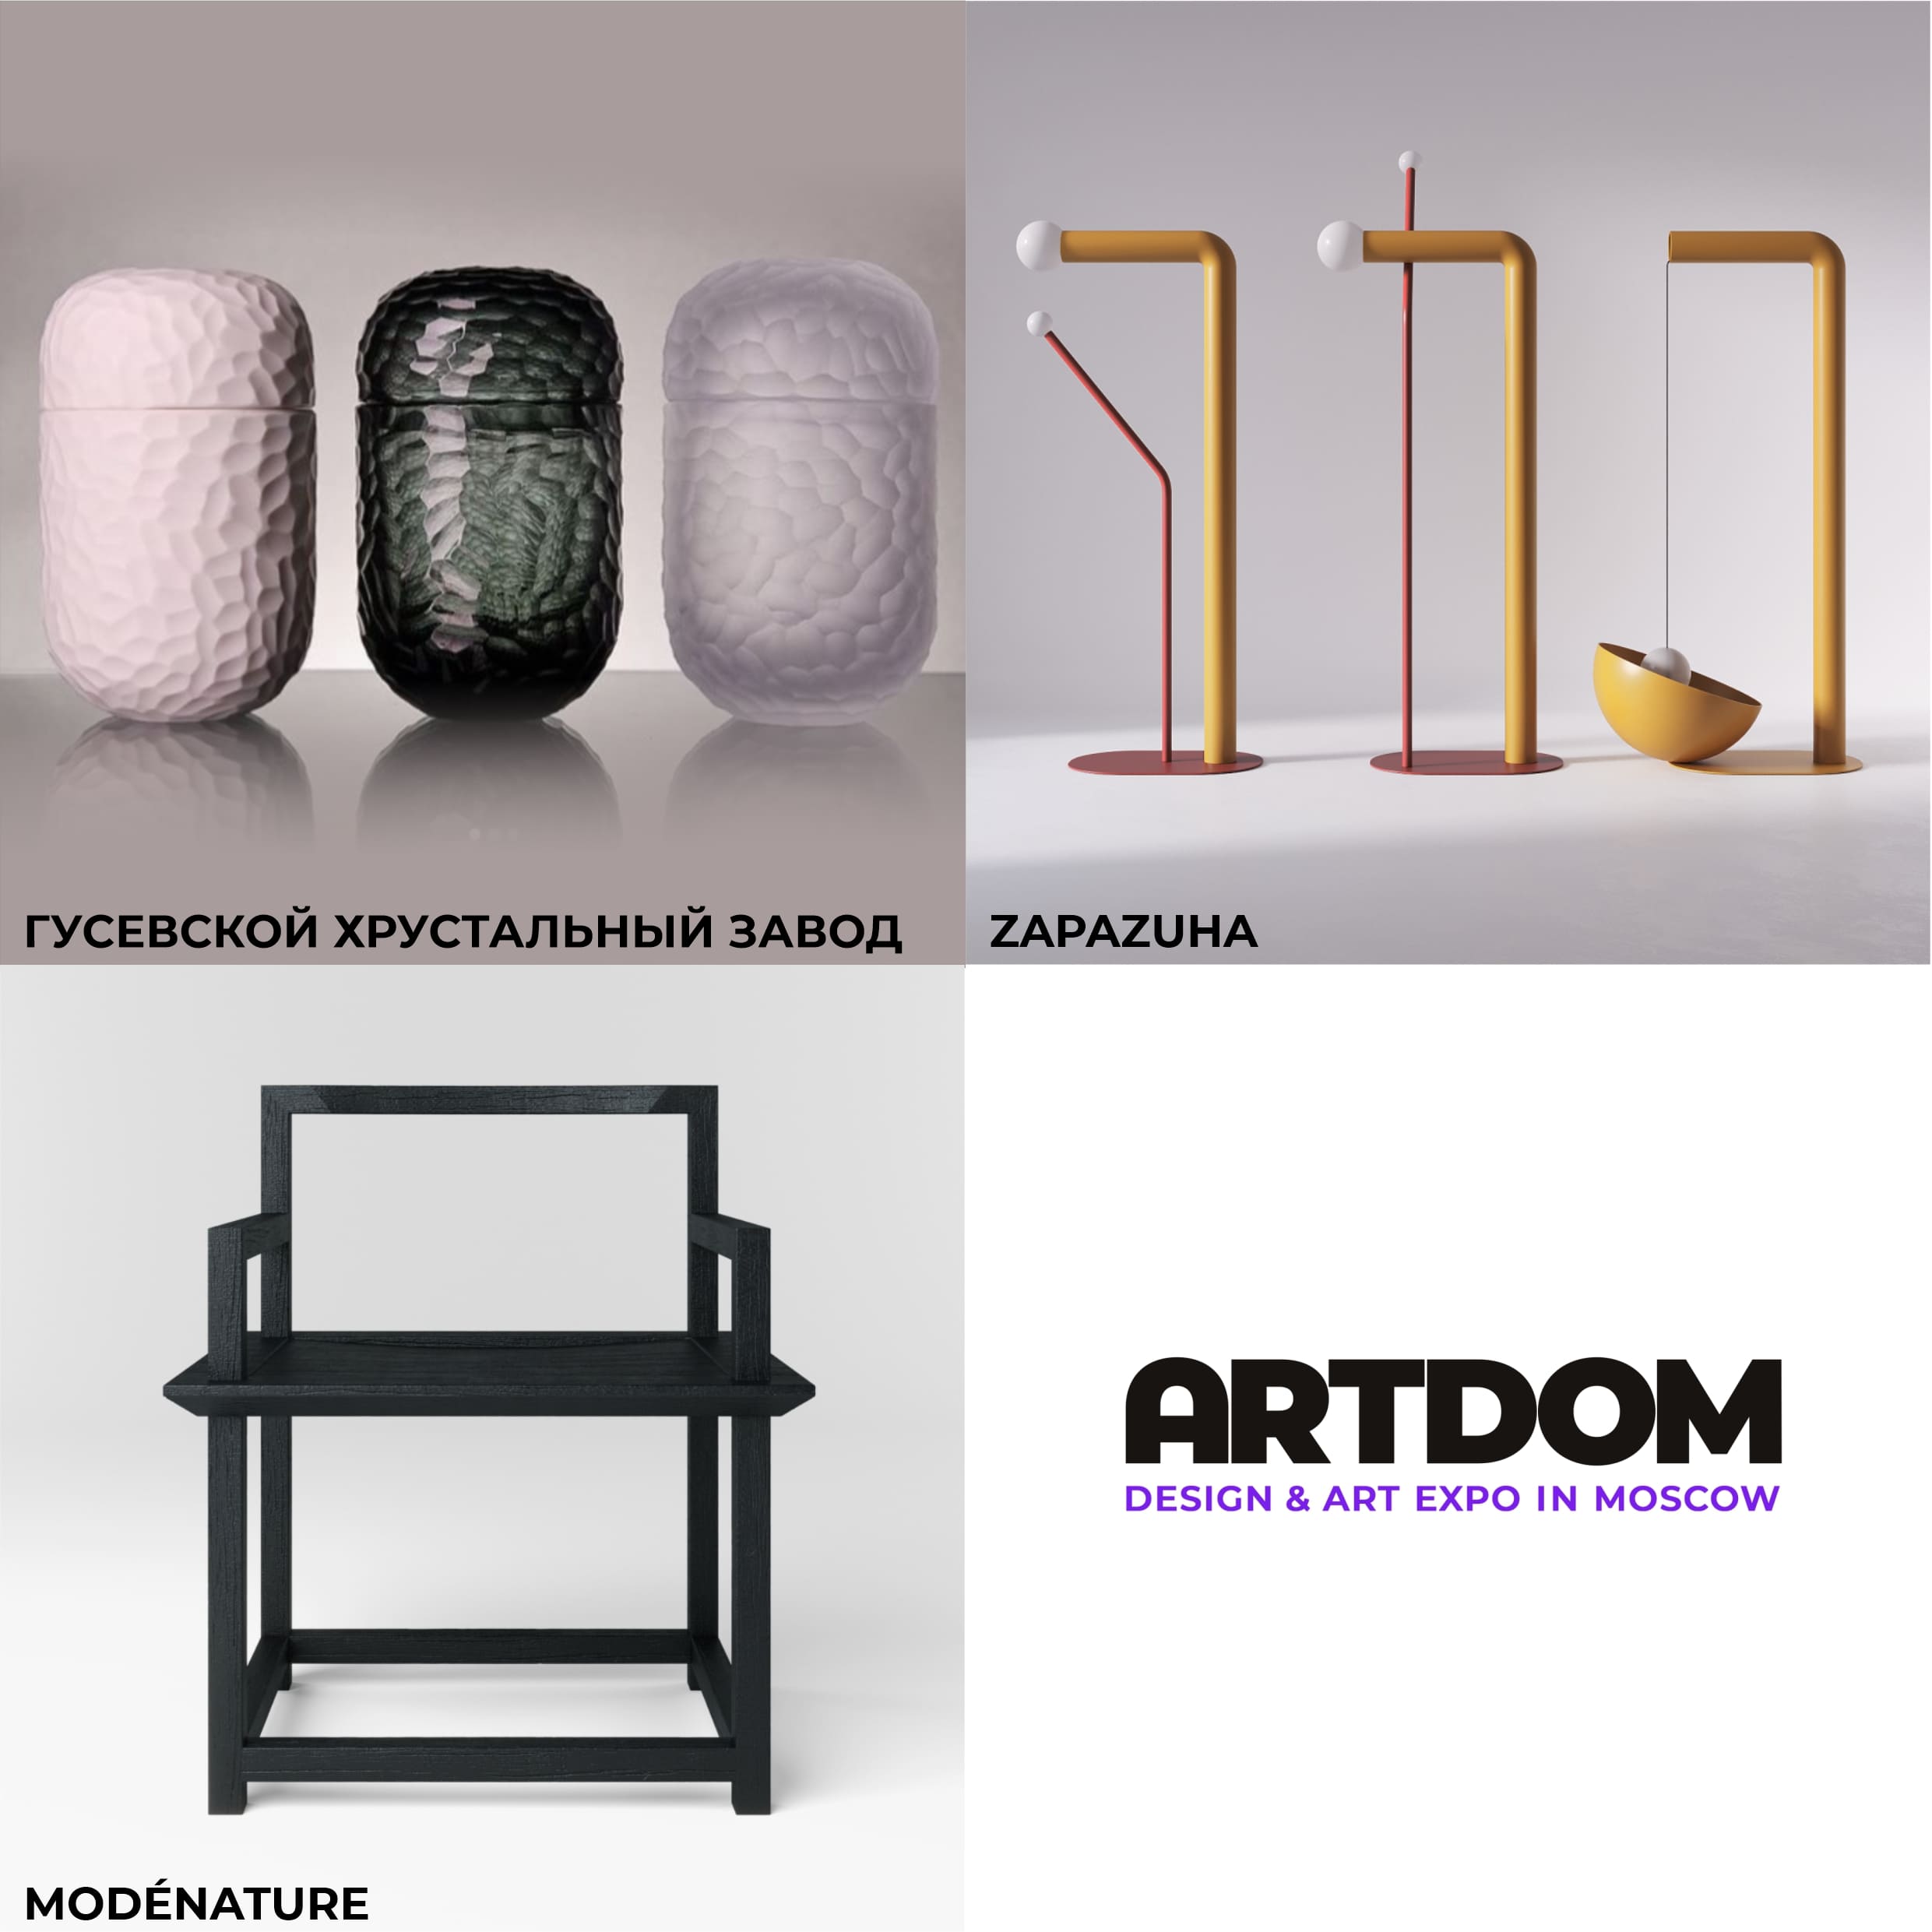 ARTDOM Design & Art Expo